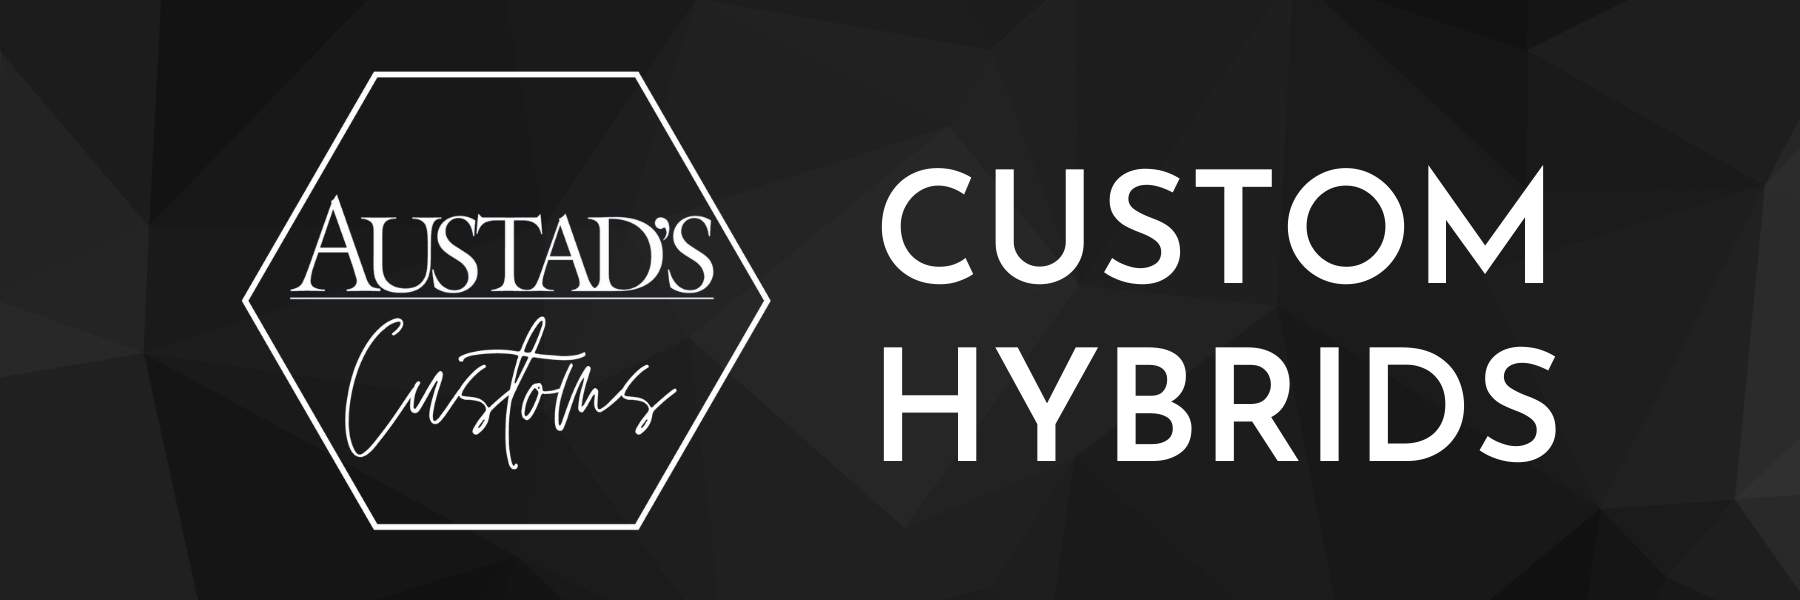 Custom Hybrids